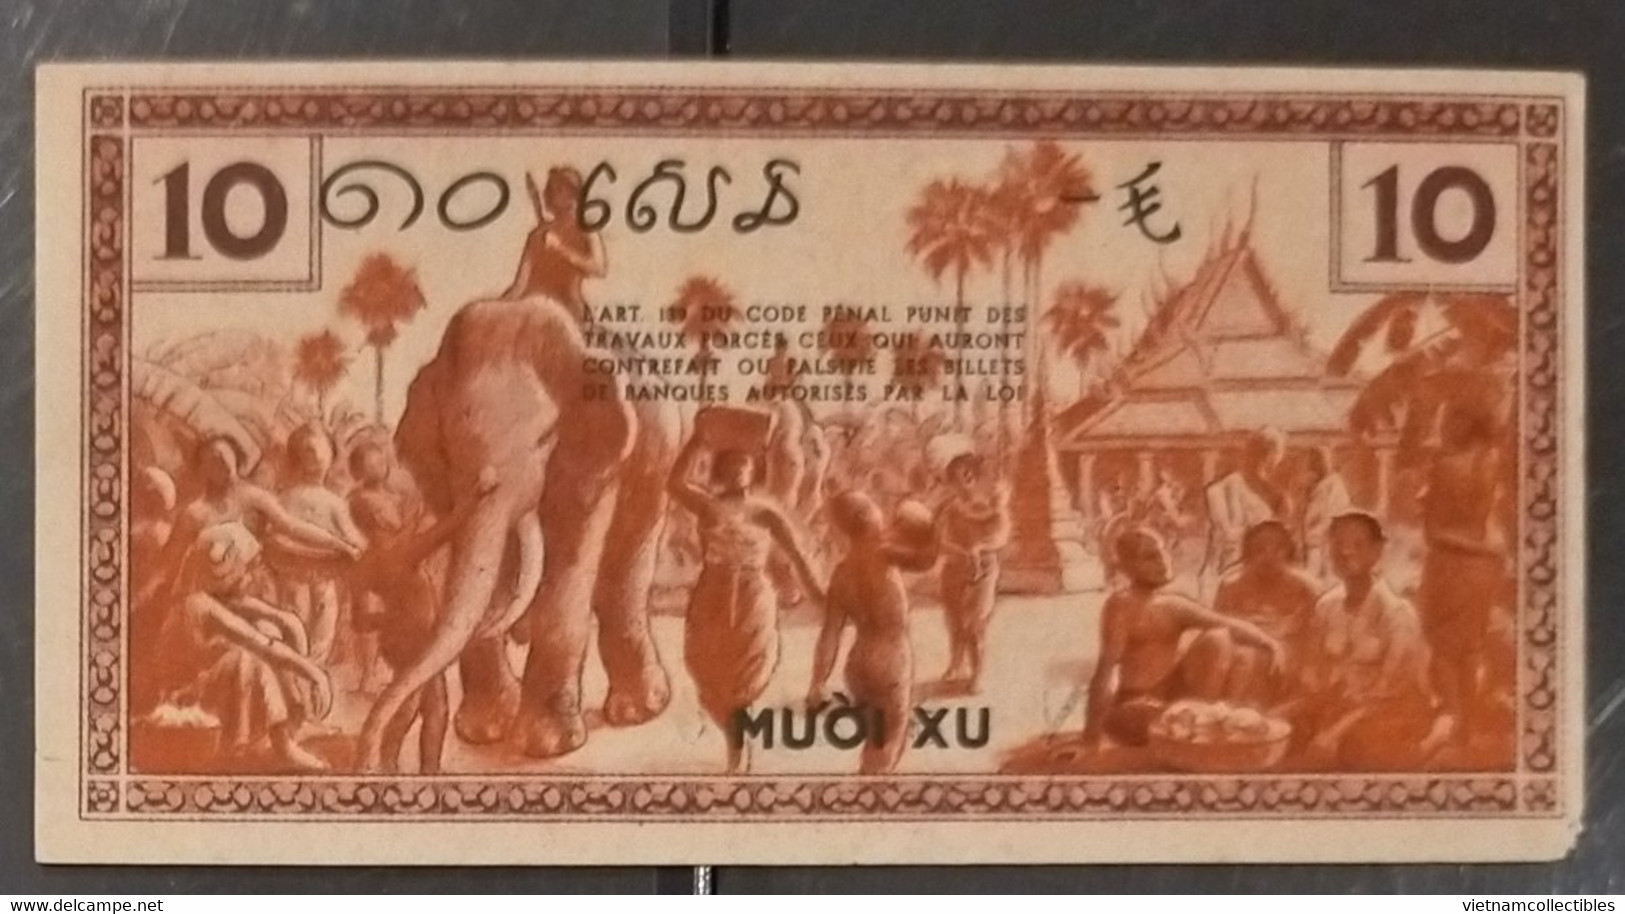 French Indochine Indochina Vietnam Viet Nam Laos Cambodia 10 Cents AU Banknote Note 1939 - Pick # 85a / 02 Photo - Indochine